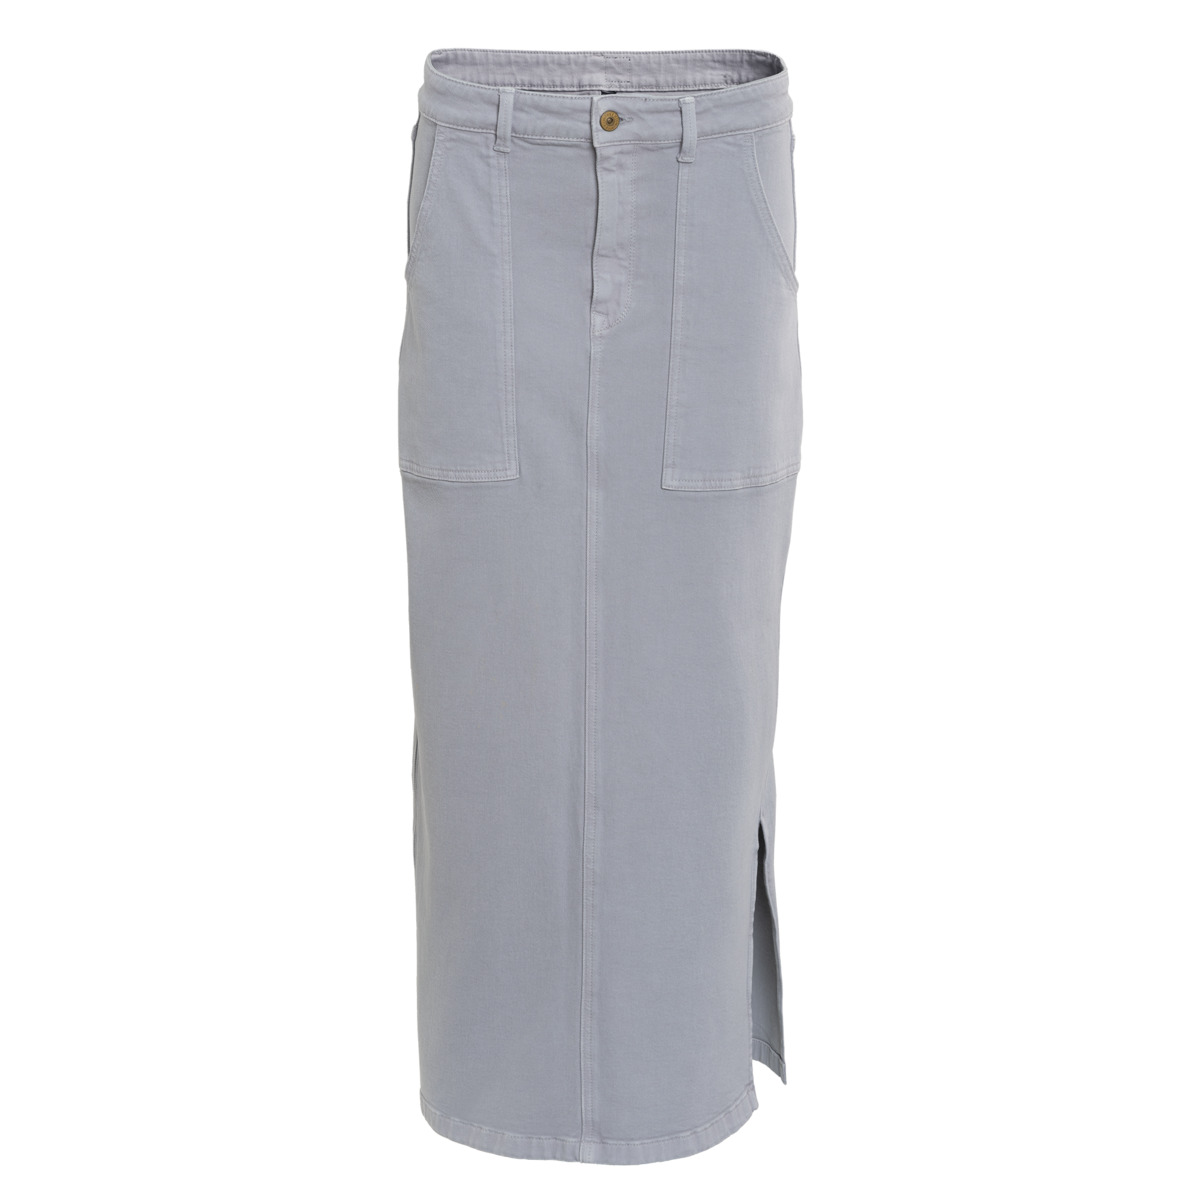 Grey Skirt, BAHIRA